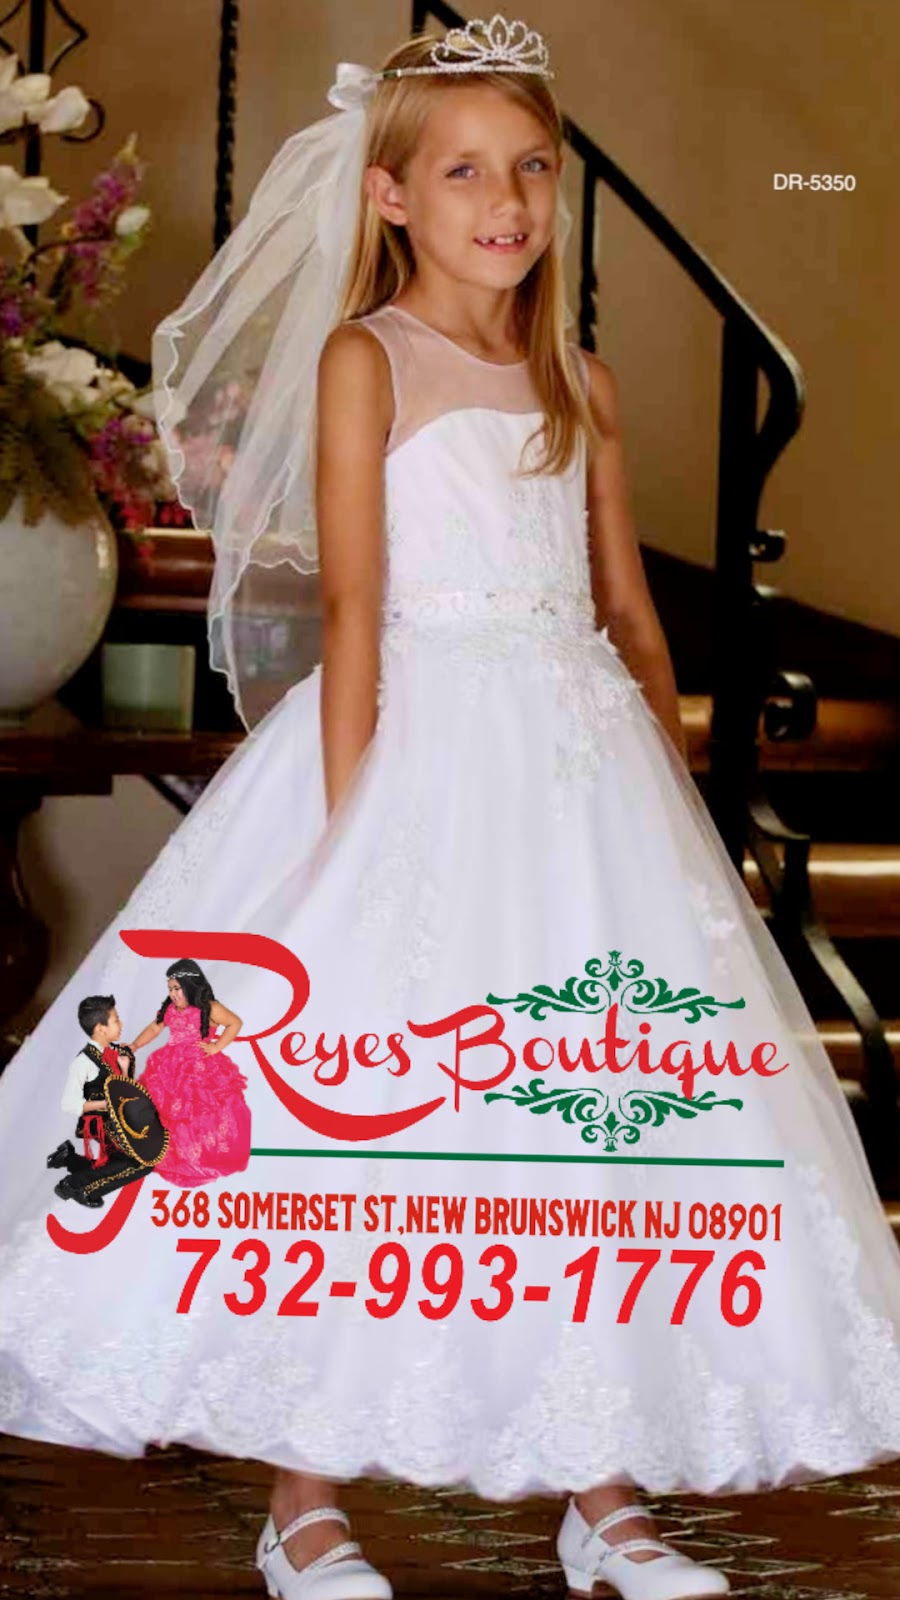 Reyes Boutique & Party Place LLC | 368 Somerset St, New Brunswick, NJ 08901 | Phone: (732) 993-1776